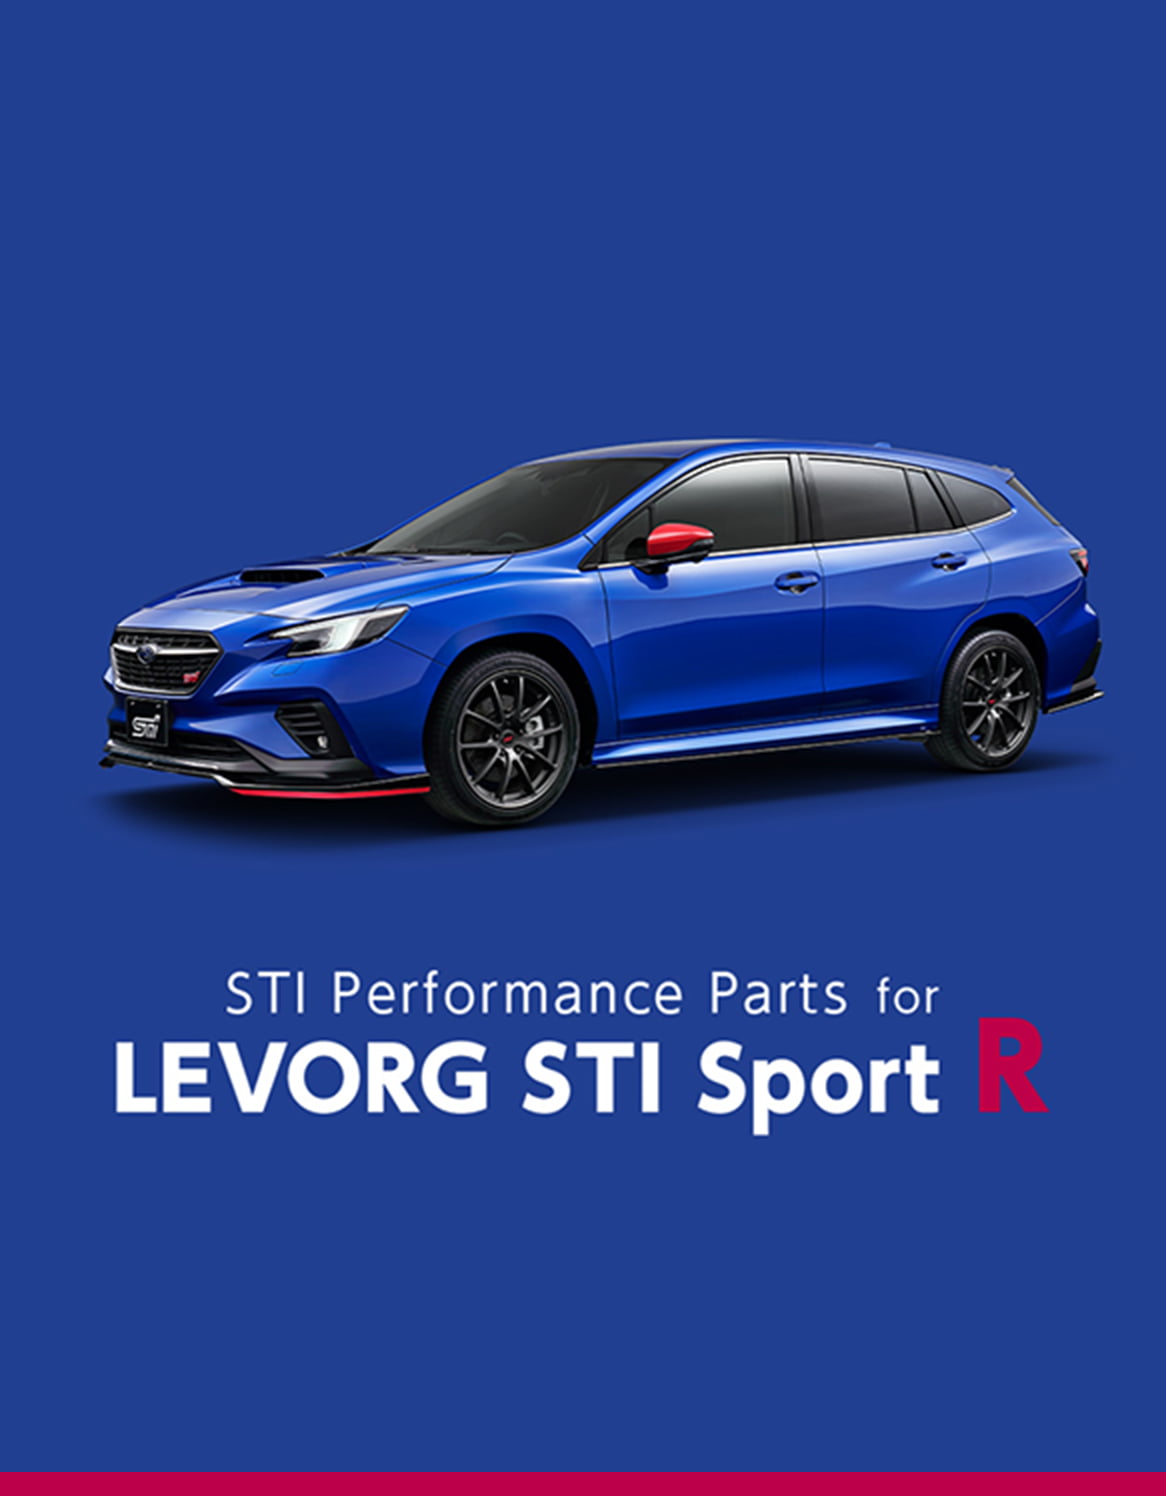 STI Performance Parts for LEVORG STI Sport R